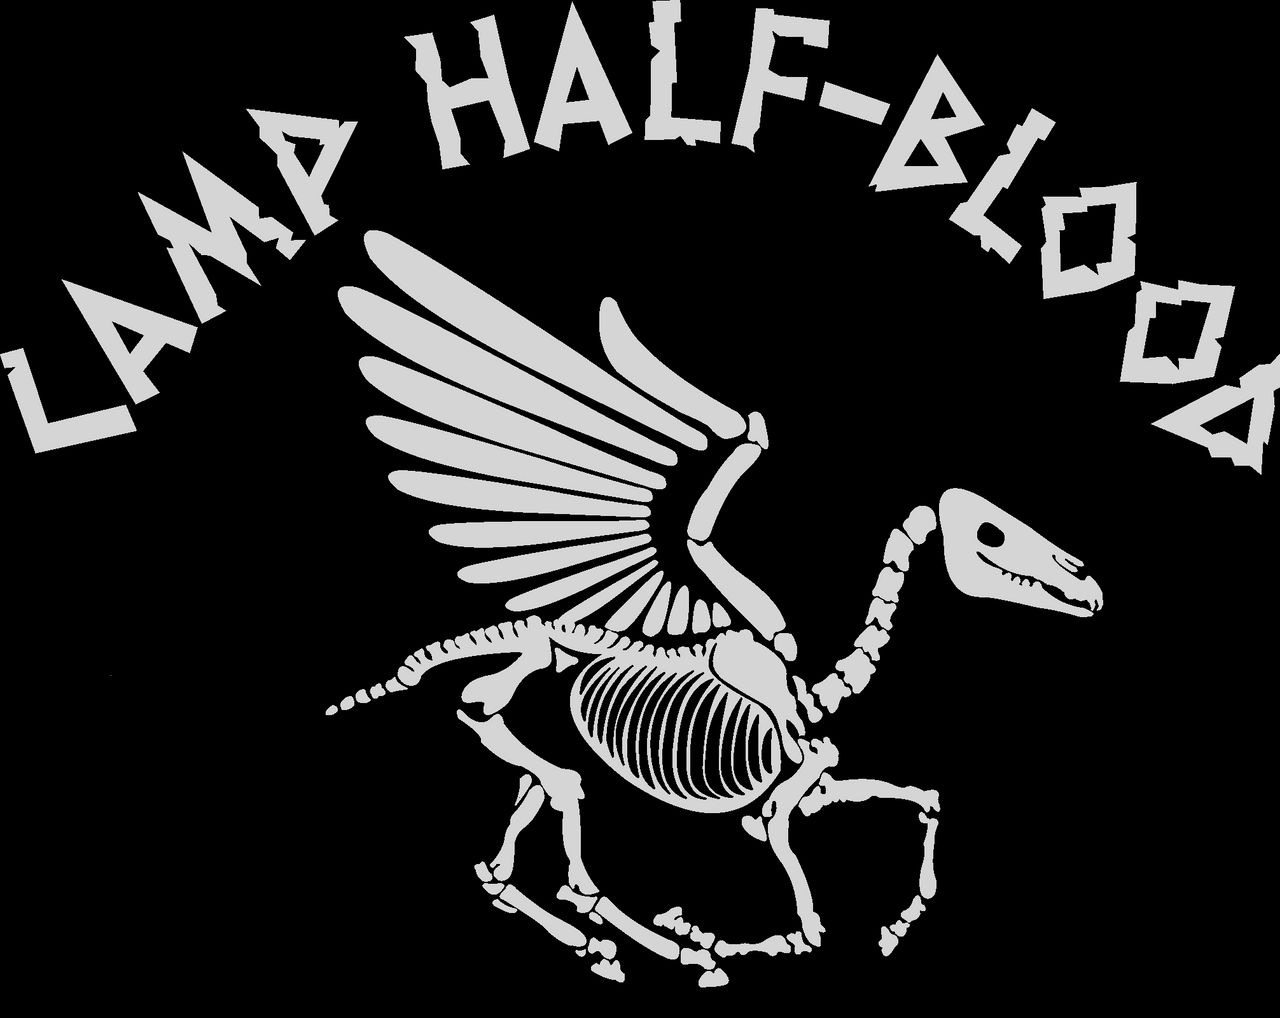 Download ・ﾟ✧ Camp Half Blood * ✧・ﾟ - Camp Half Blood Shirt Mugs PNG Image  with No Background 